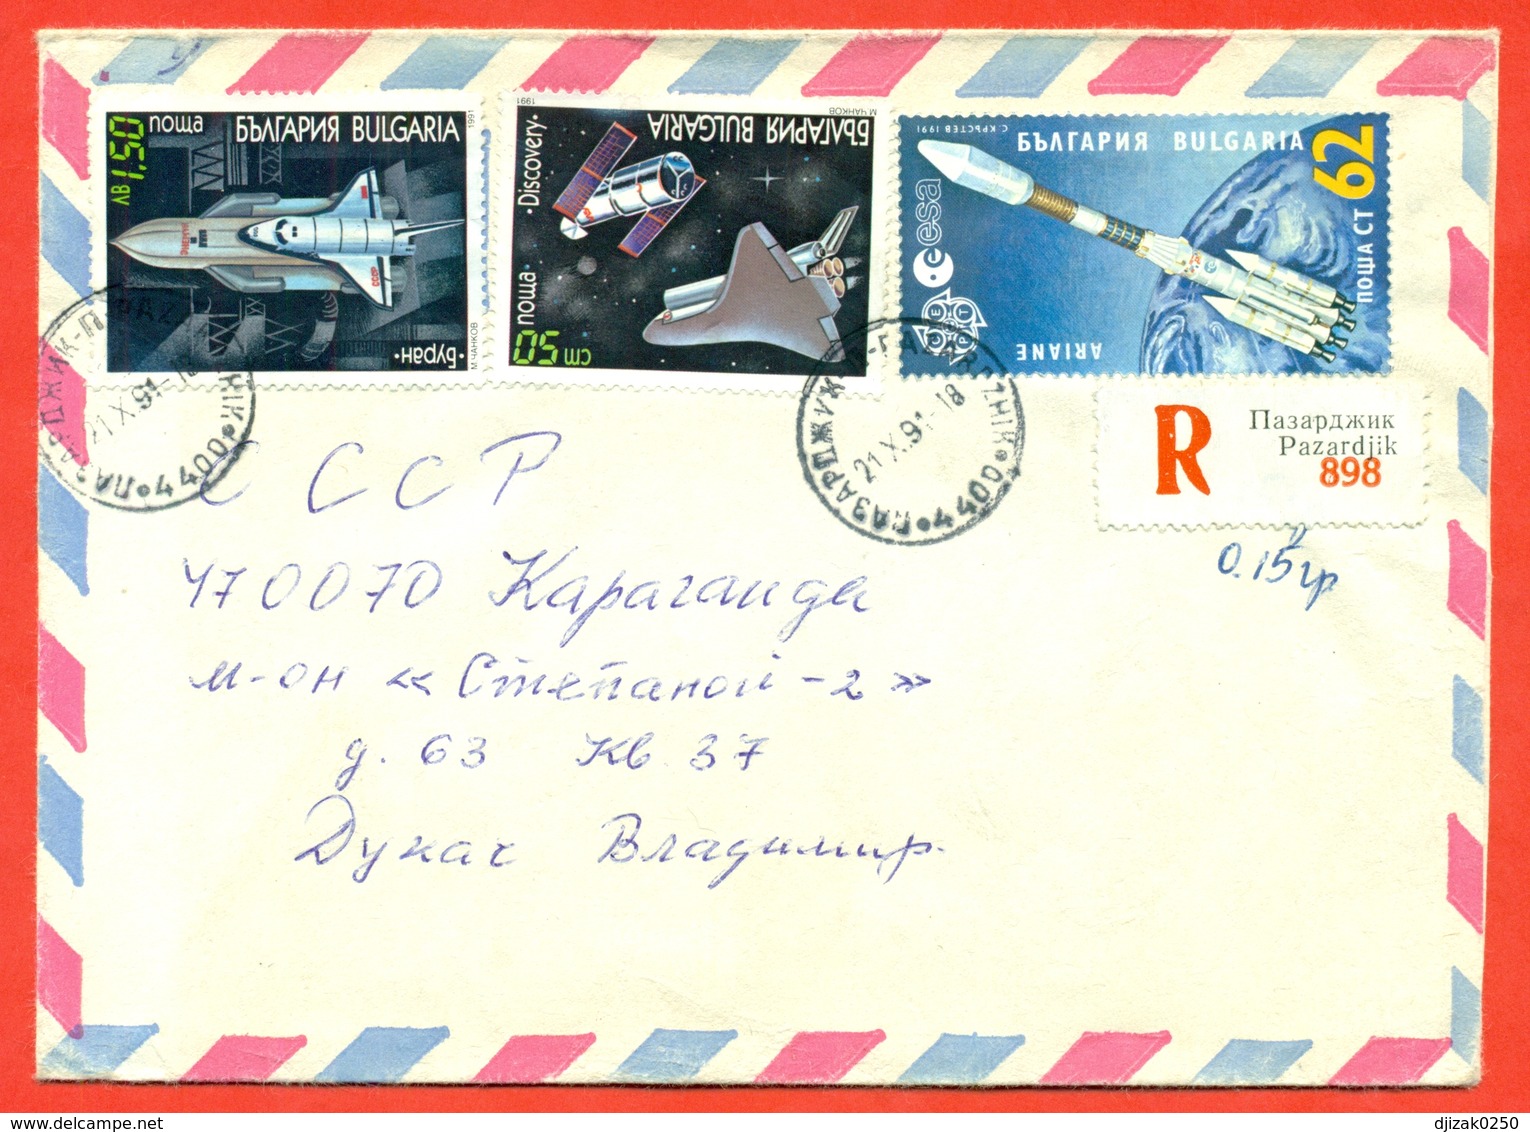 Bulgaria 1991. Registered Envelope Passed Mail. Airmail. - Europe